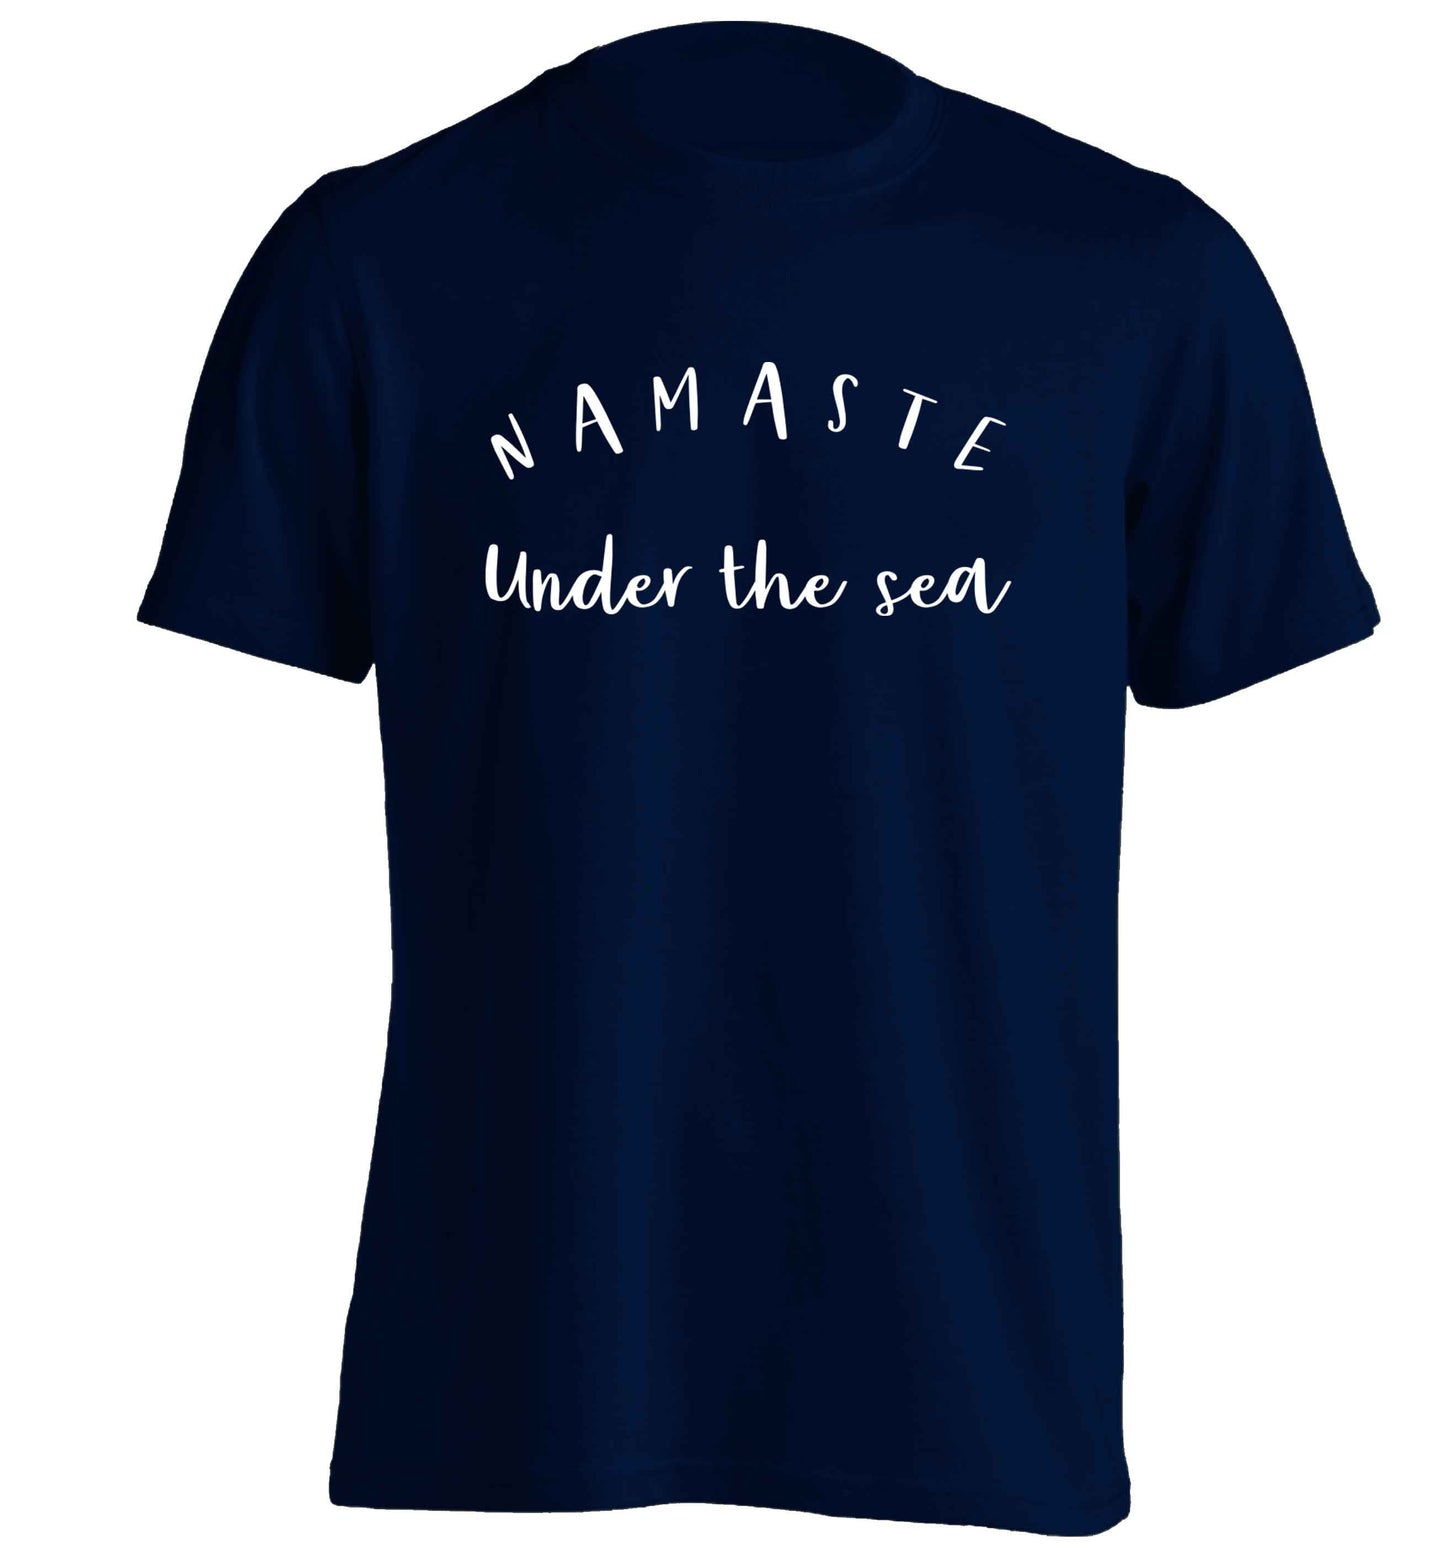 Namaste under the water adults unisex navy Tshirt 2XL